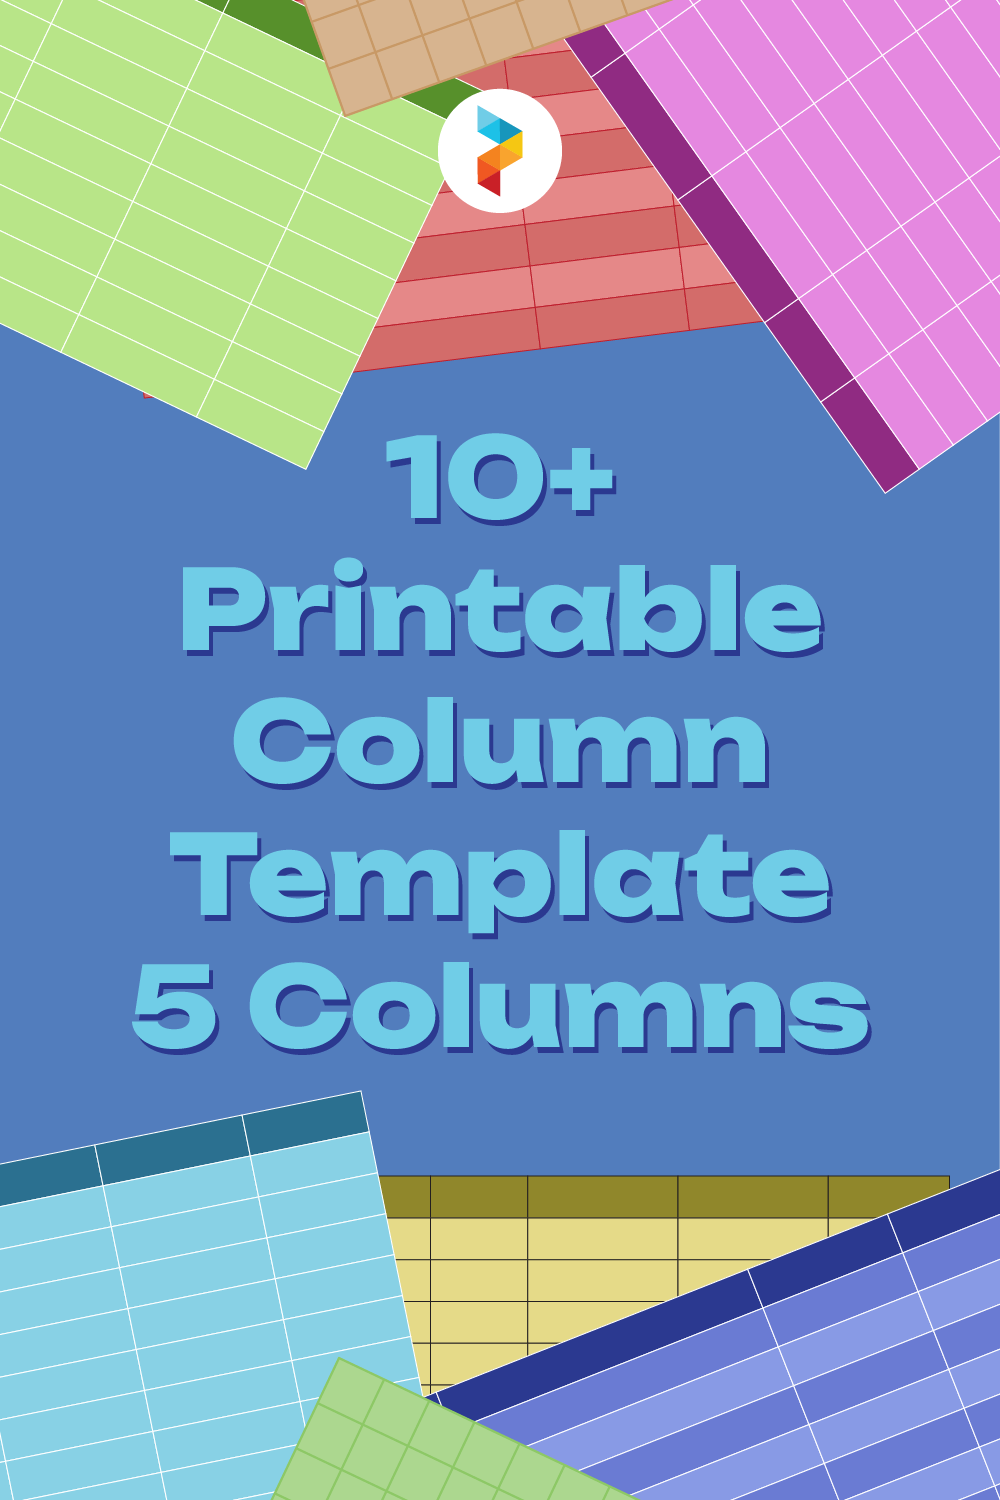 Printable Column Template 5 Columns